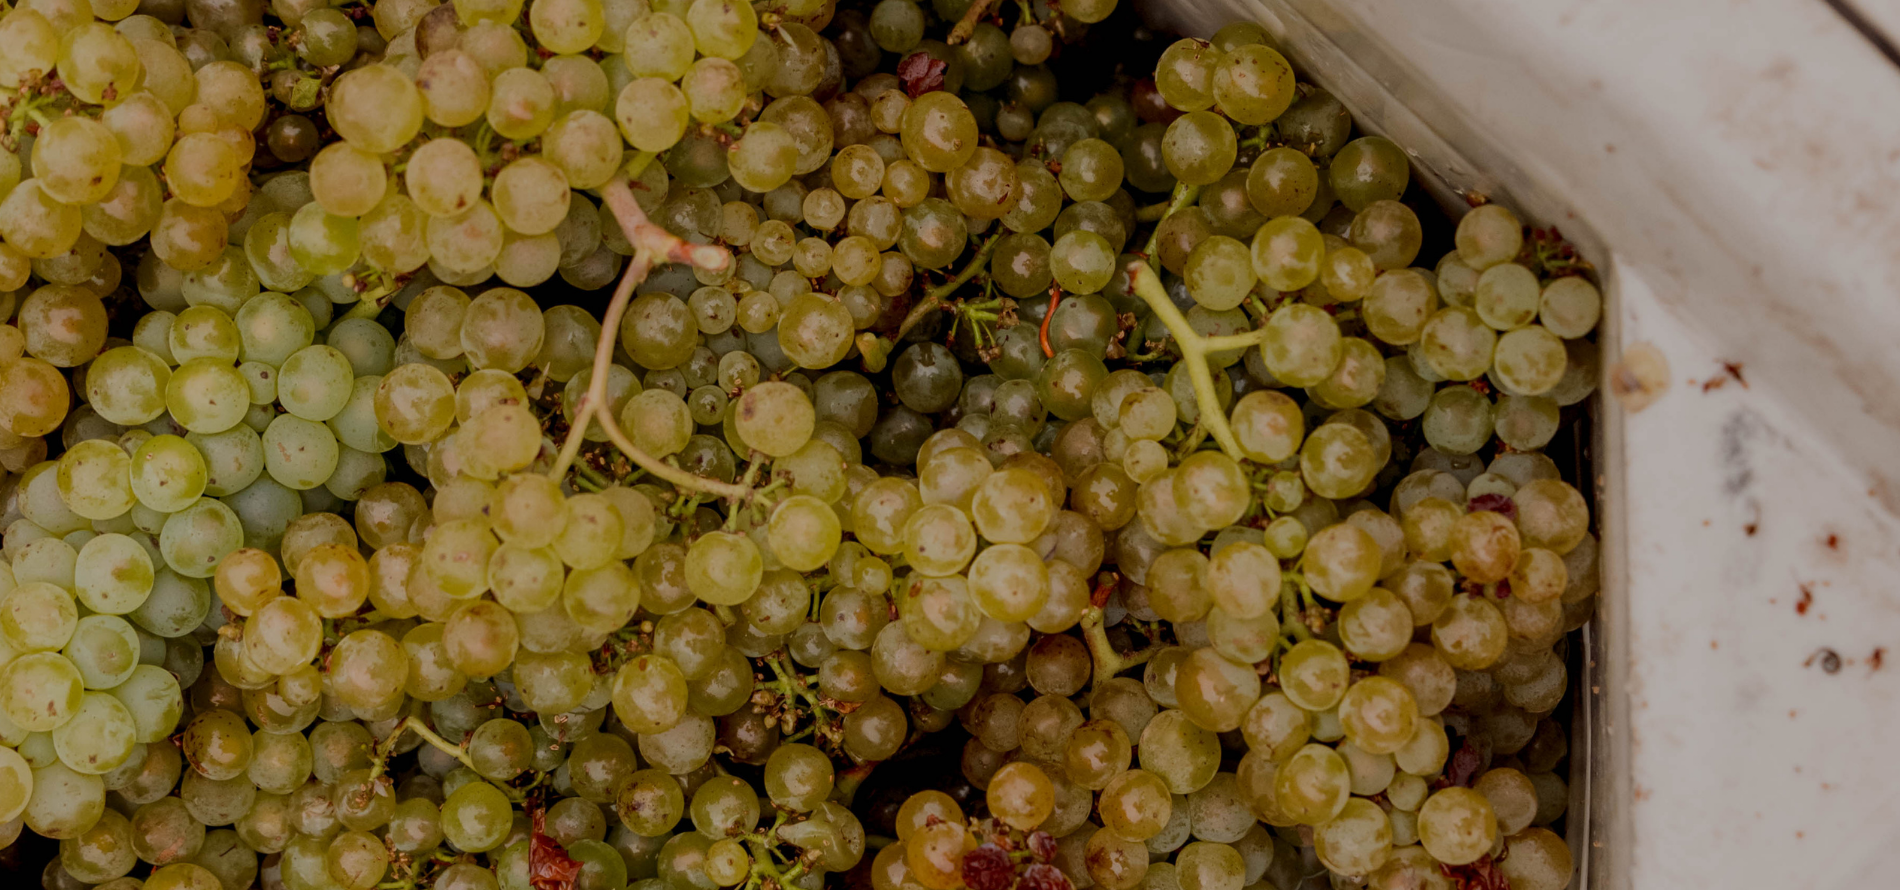 Chamisal winemaking grapes